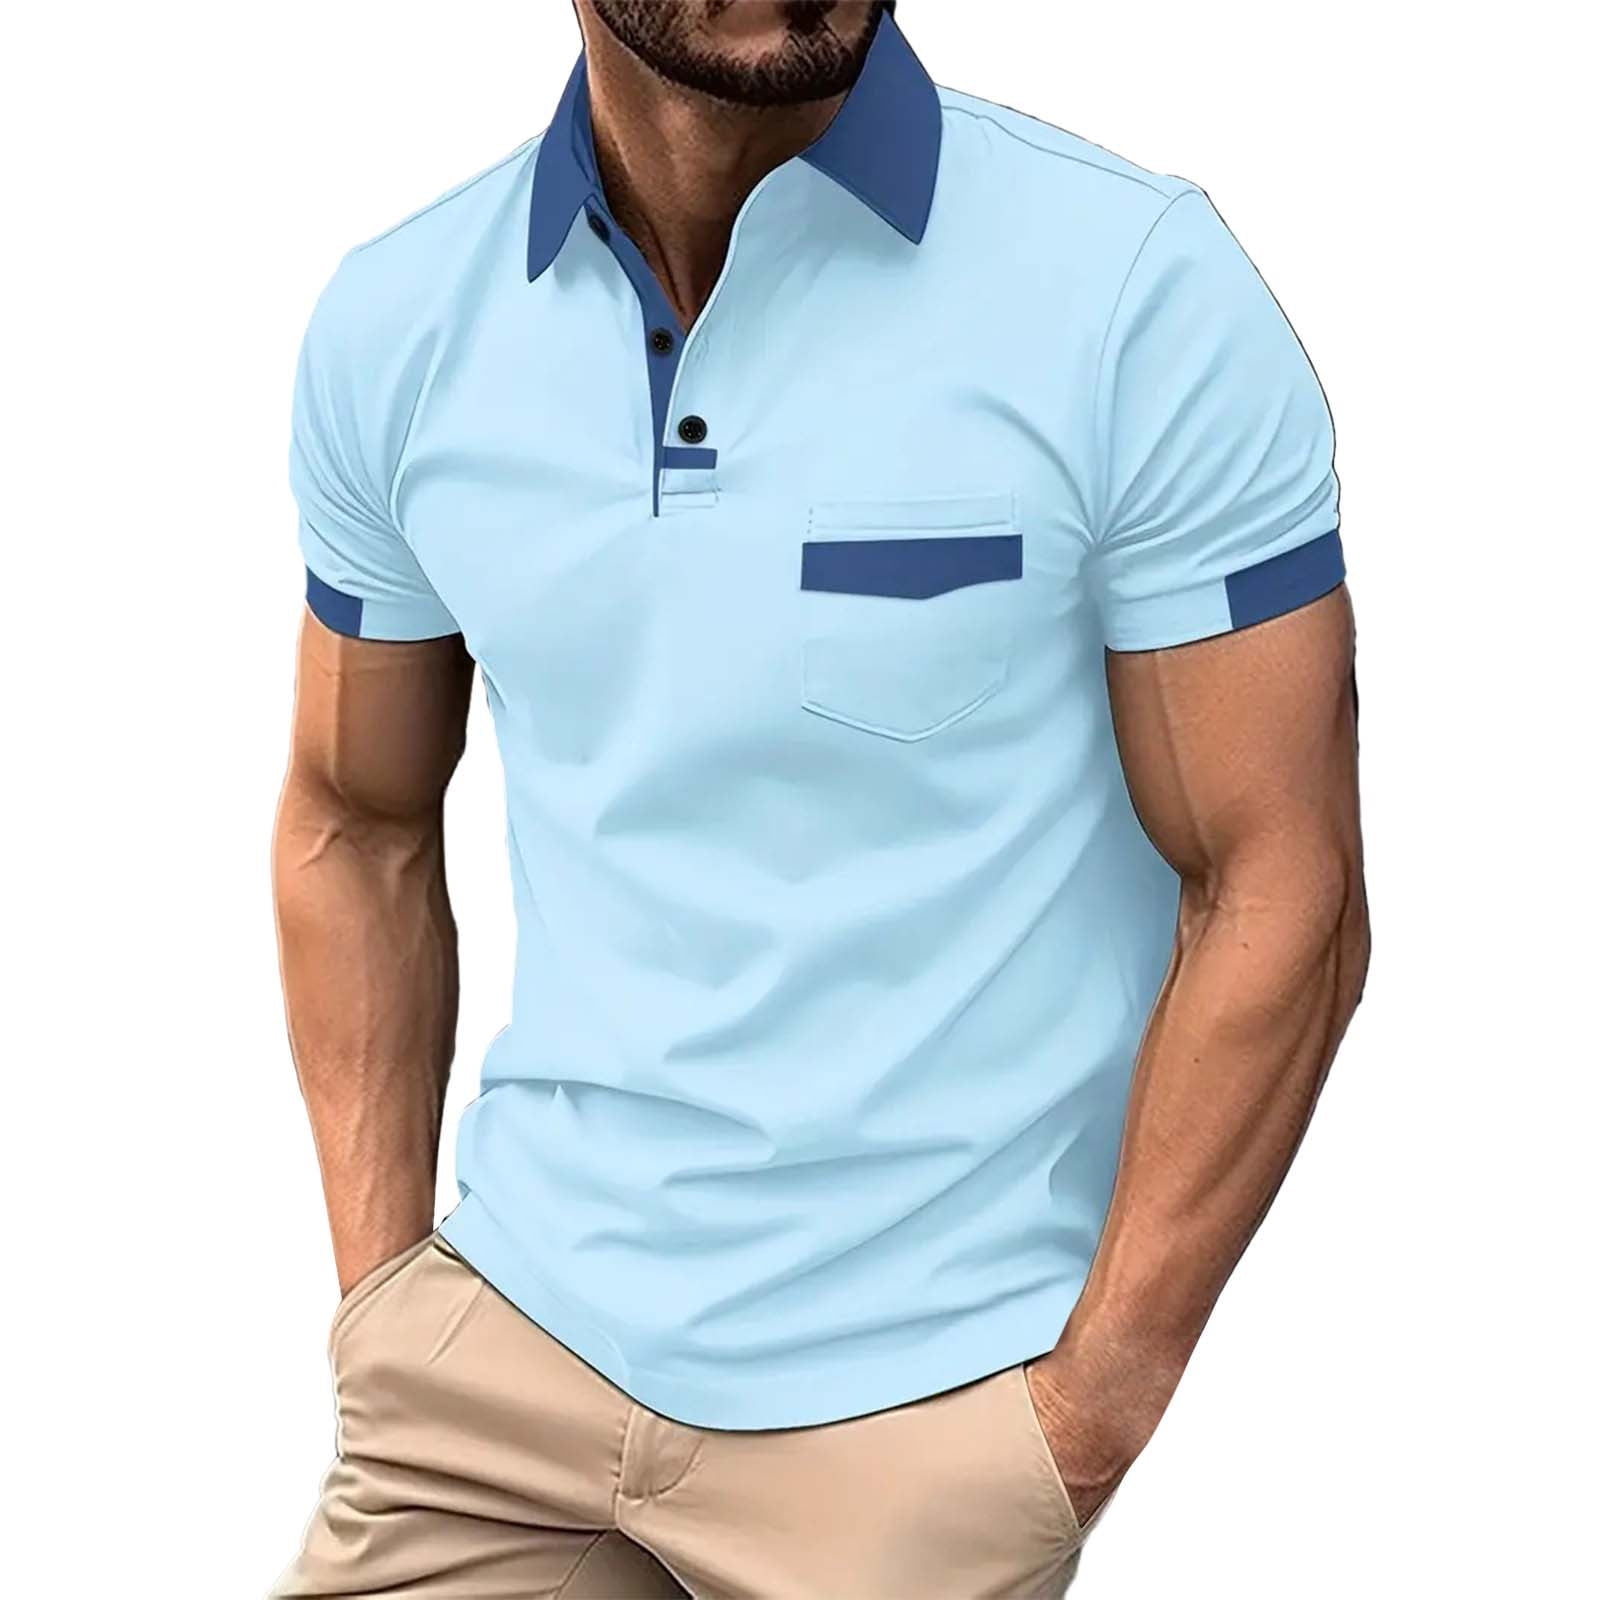 LLIMED Men's Casual Polo Shirts 3 Button Placket Tee Shirt Summer Tops ...